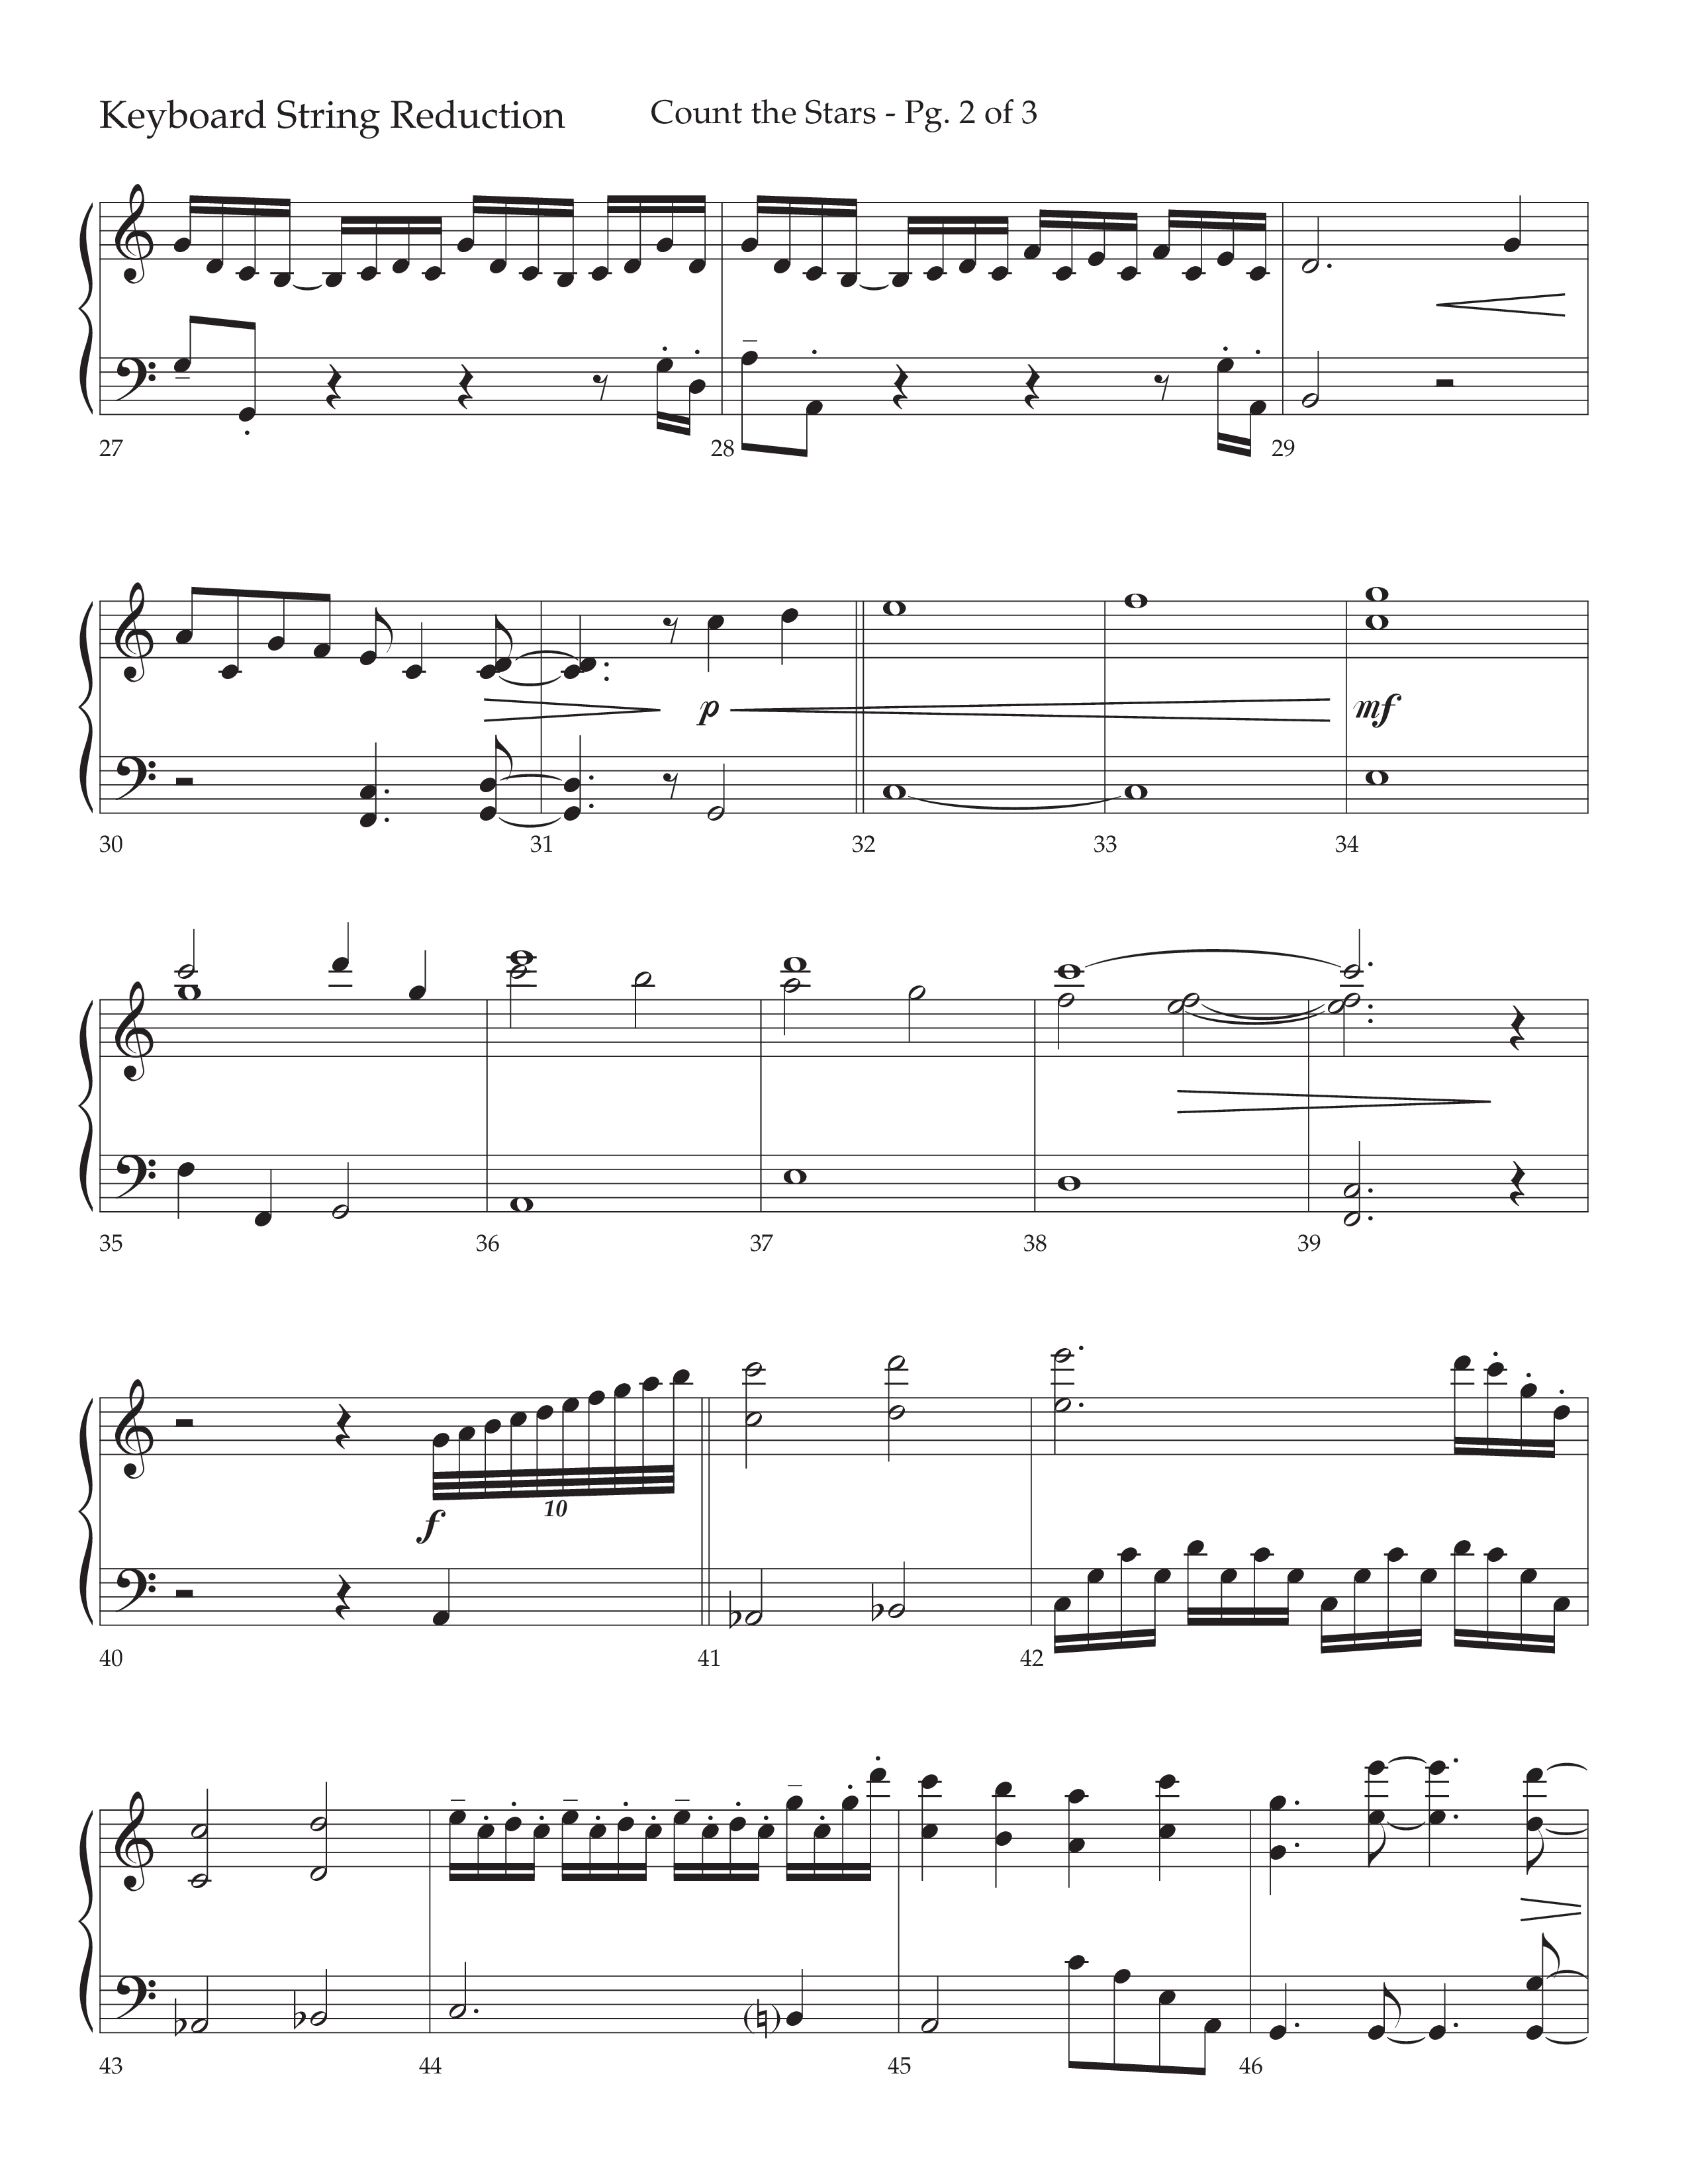 Count The Stars (Choral Anthem SATB) String Reduction (Lifeway Choral / Arr. Phillip Keveren / Arr. Kent Hooper)